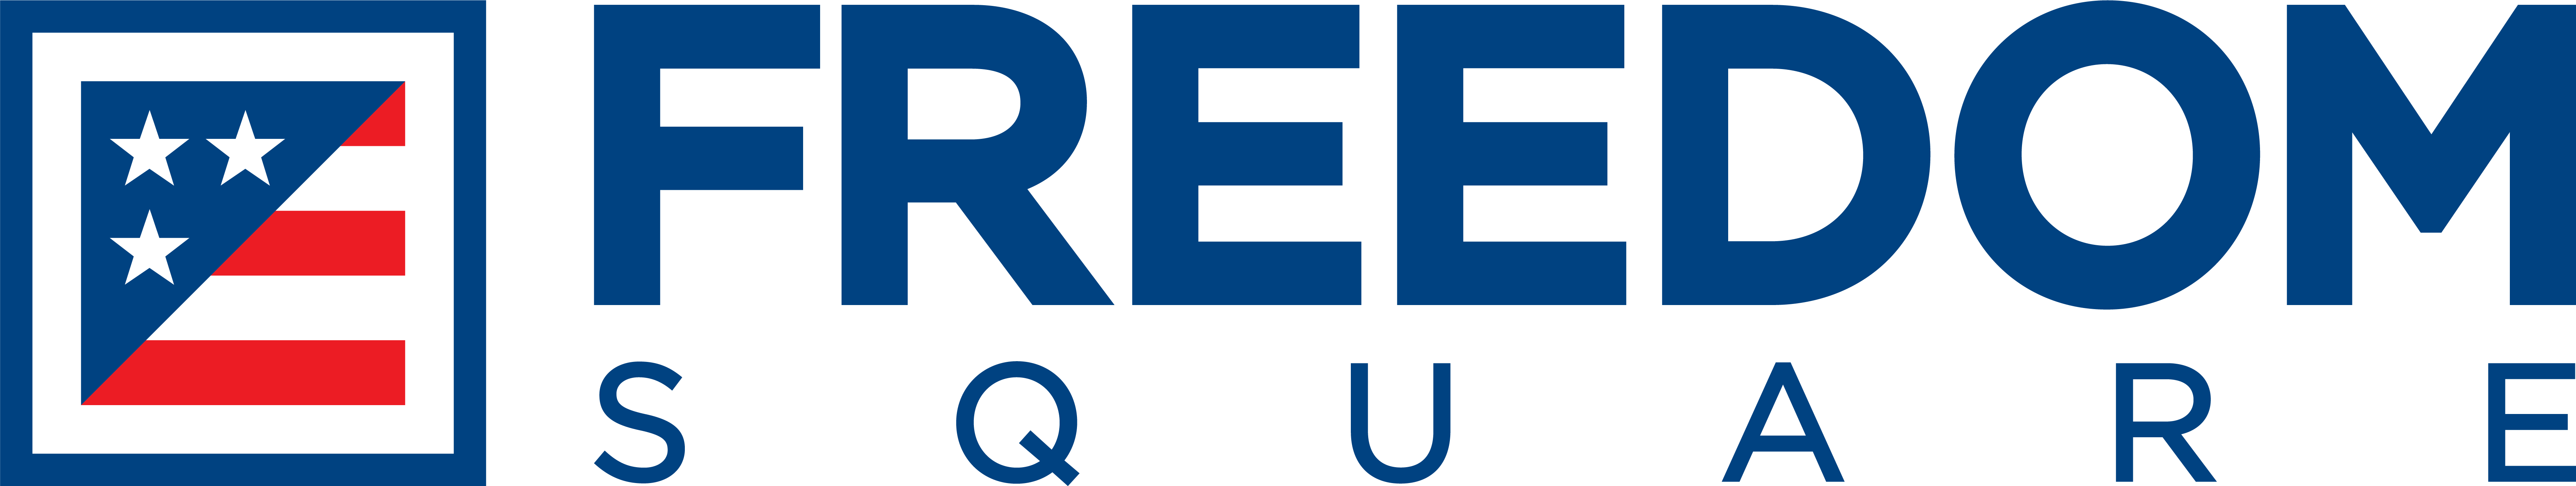 Freedom Square logo